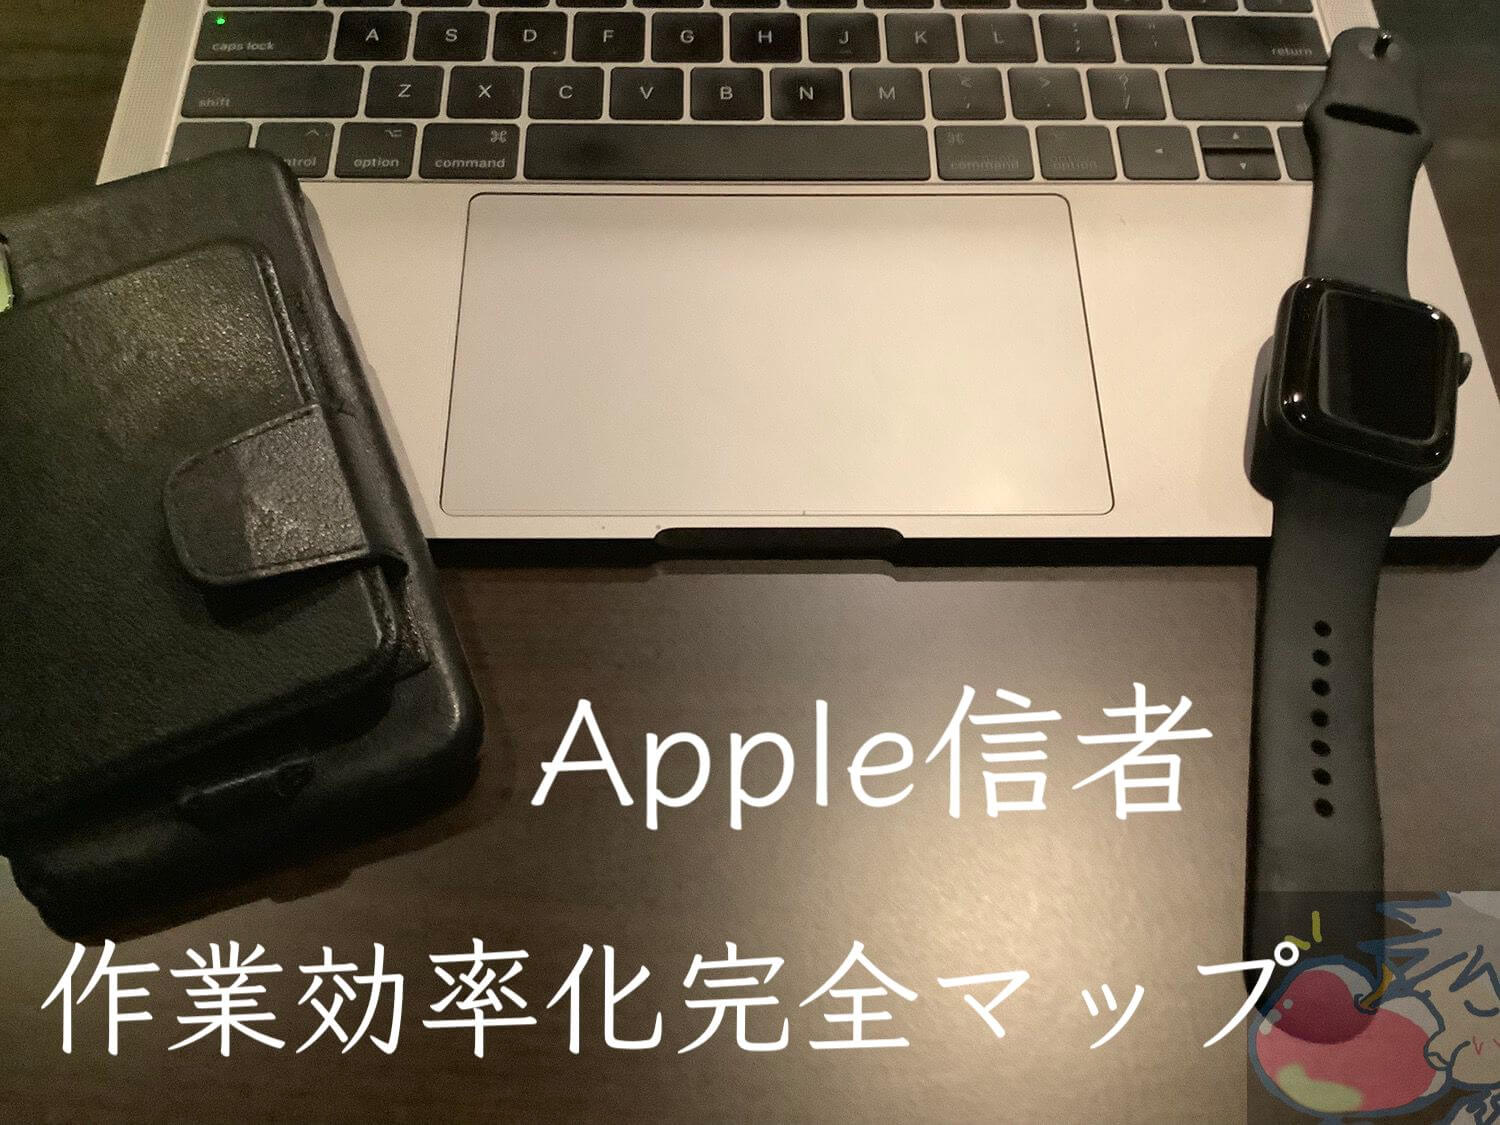 【随時更新】Apple製品 作業効率化完全マップ 2019 Ver.